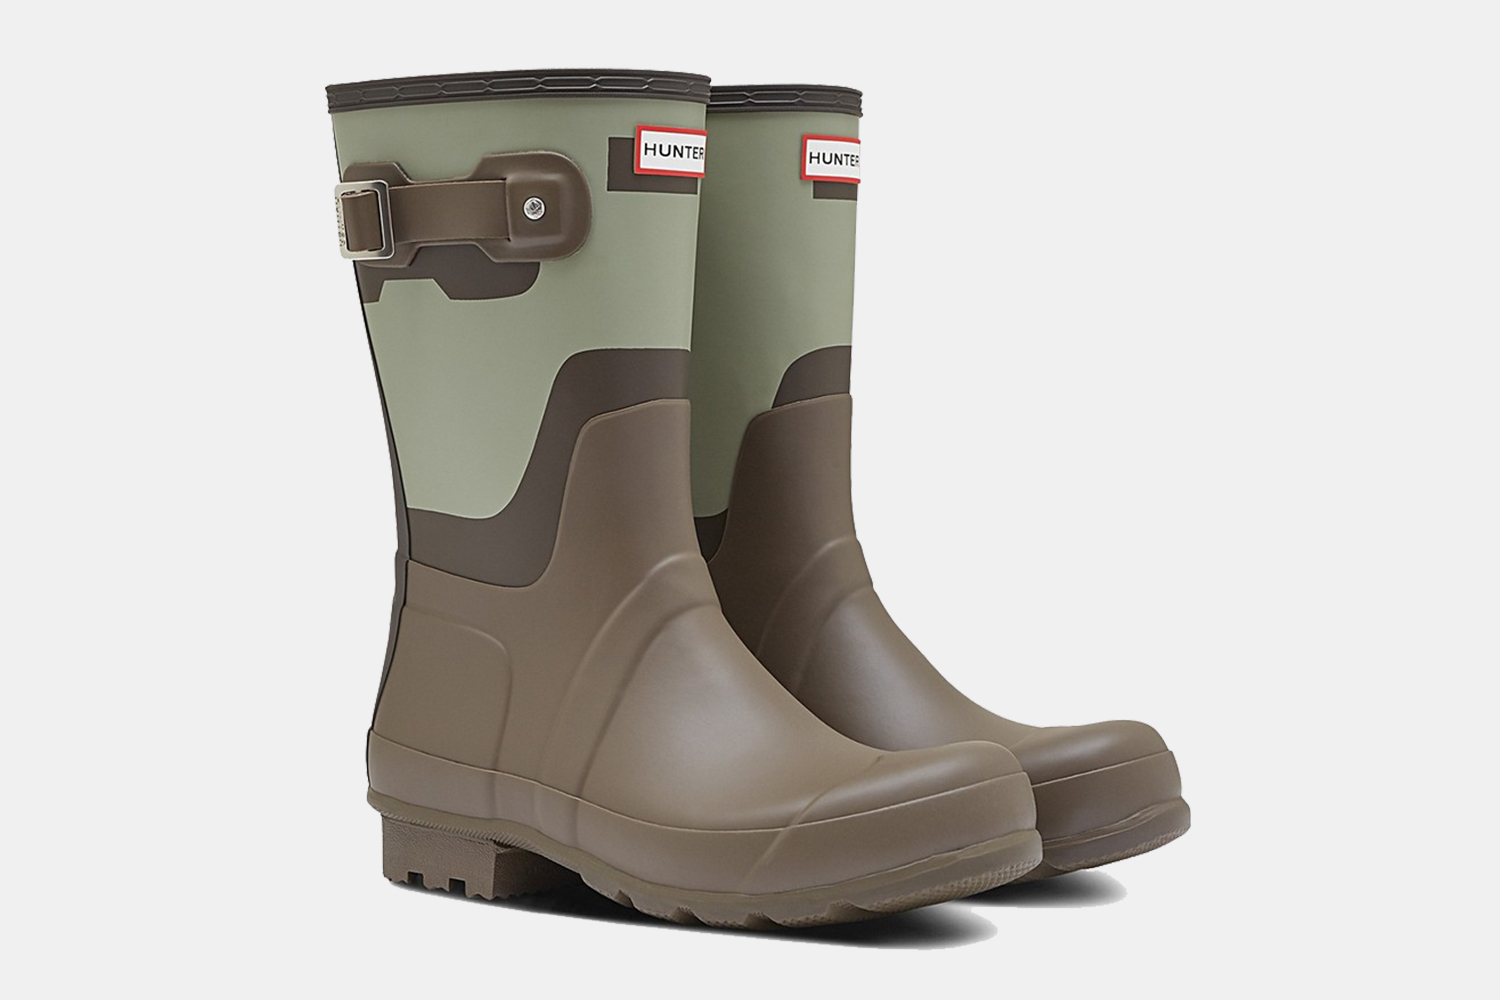 Hunter Men's Waterproof Rain Boots Are Up to 50% Off - InsideHook